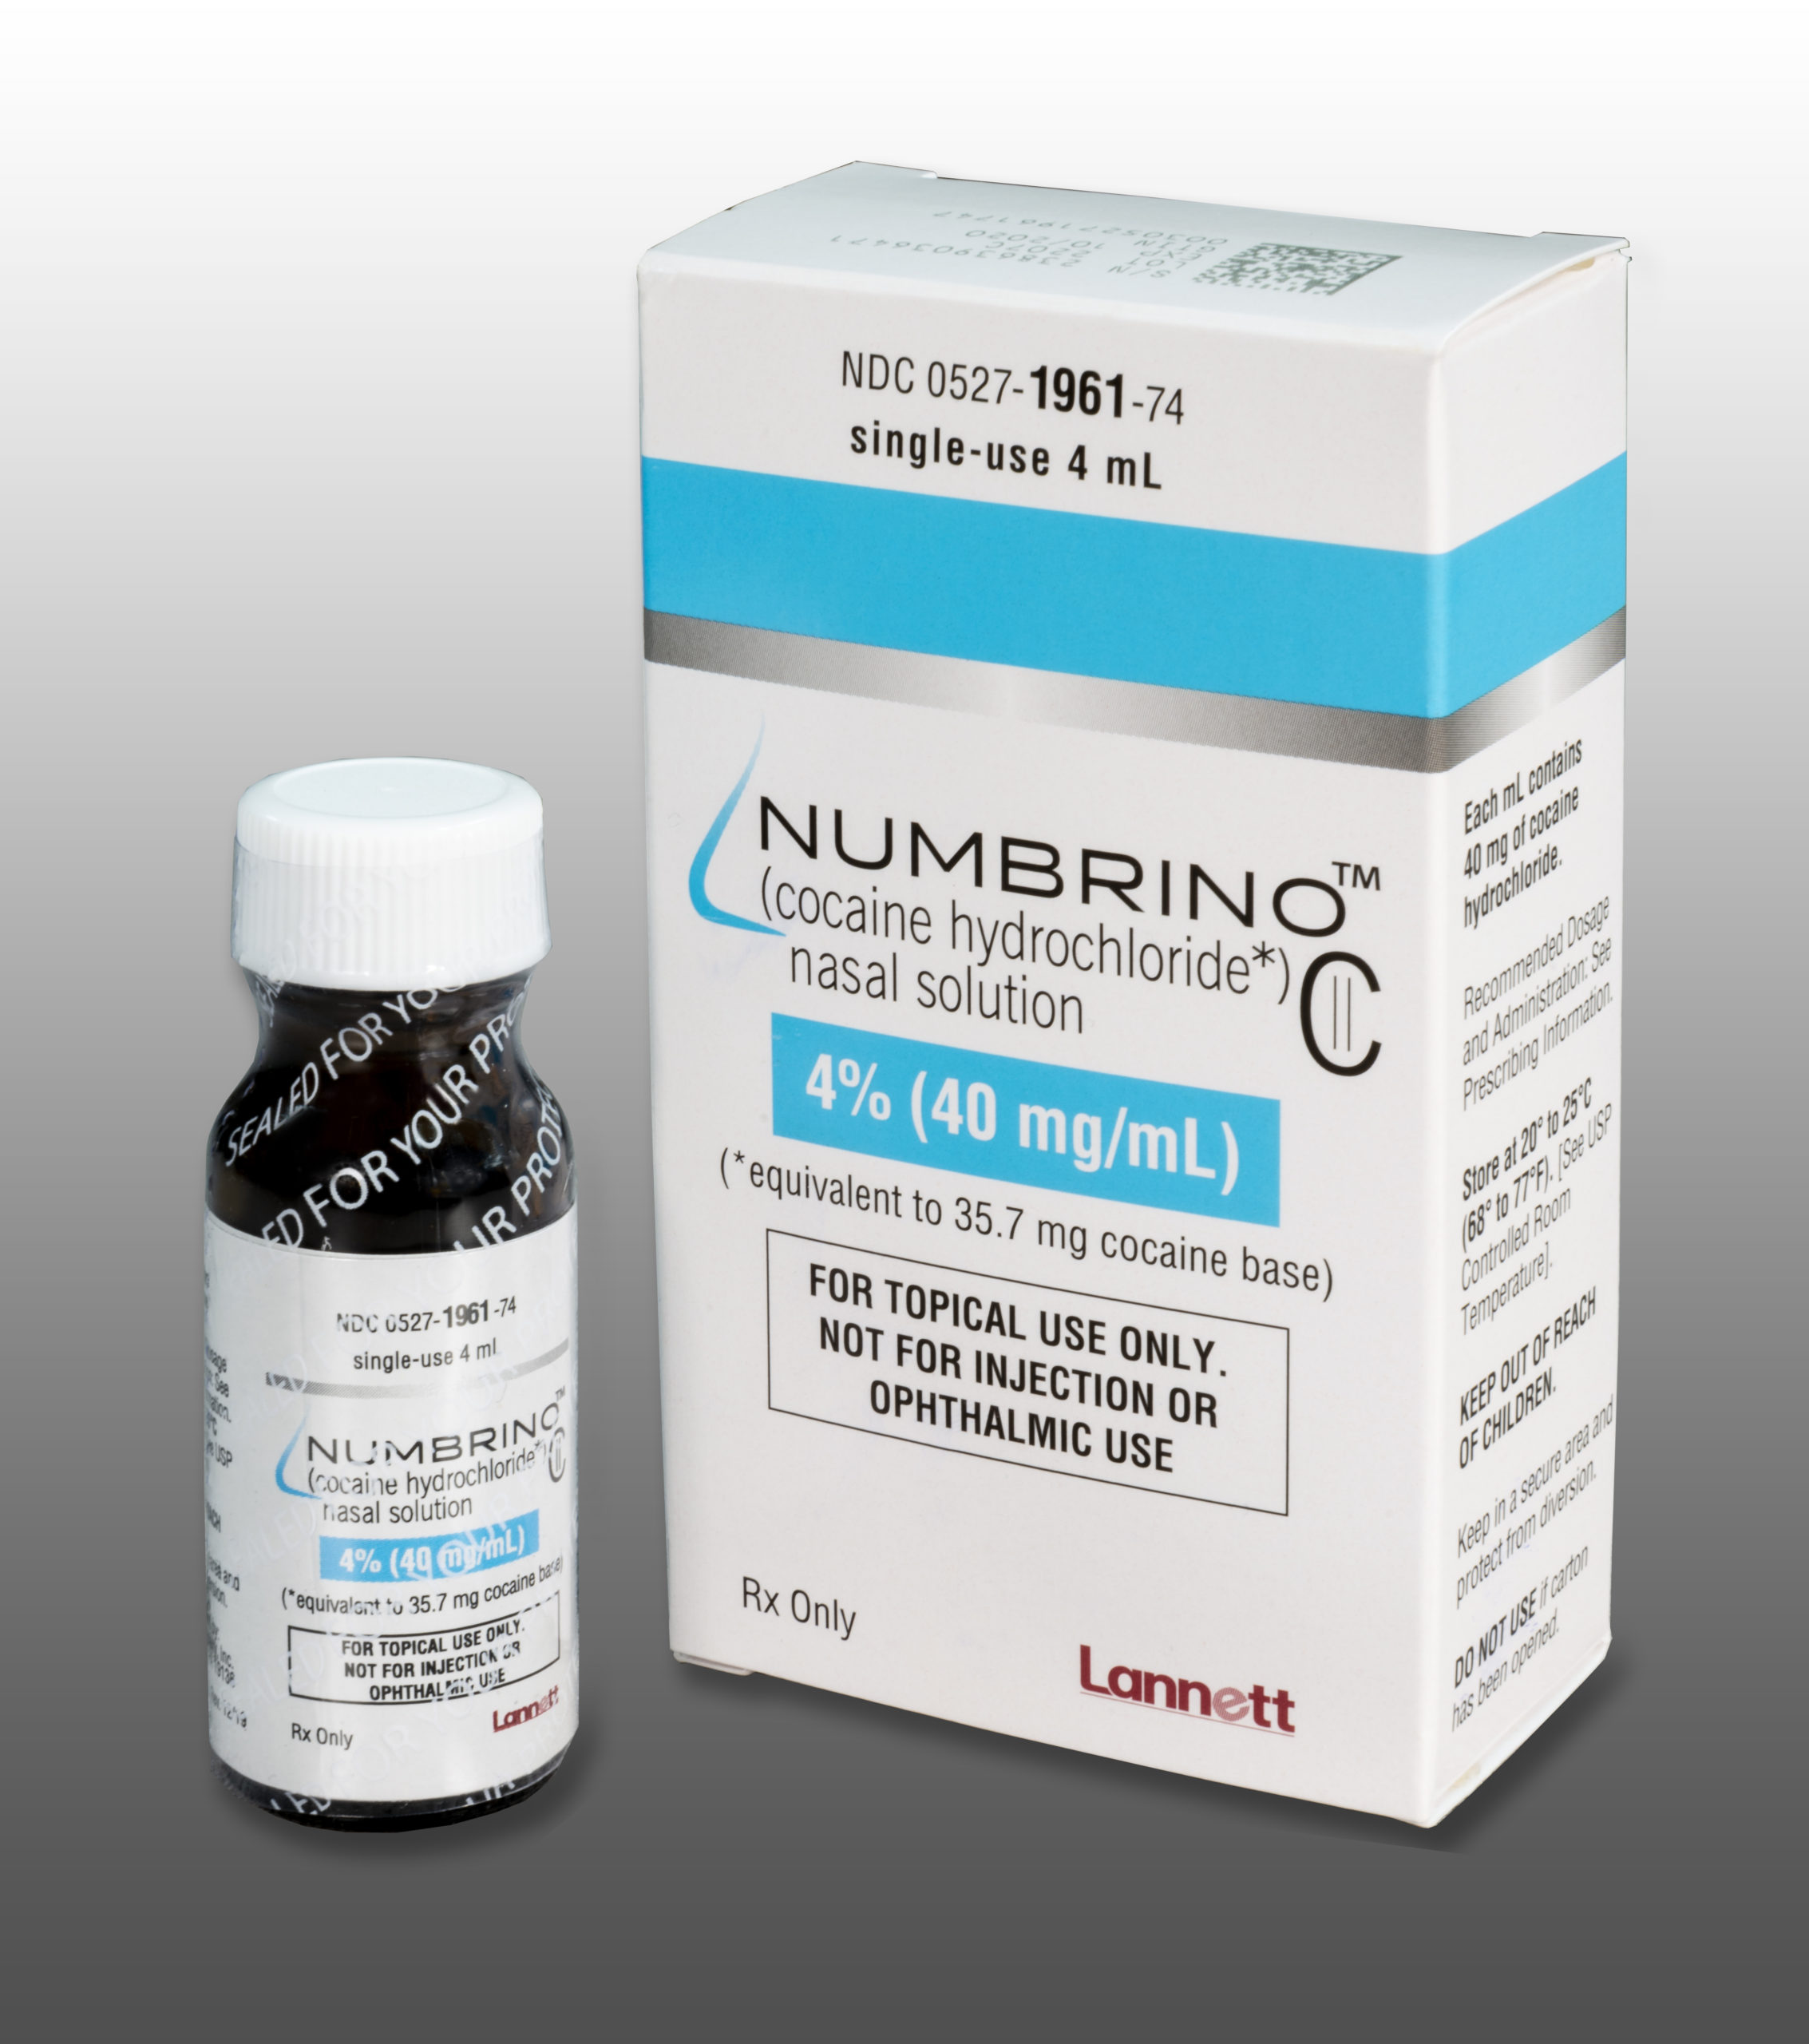 Numbrino™ (Cocaine Hydrochloride Nasal Solution) (CII)